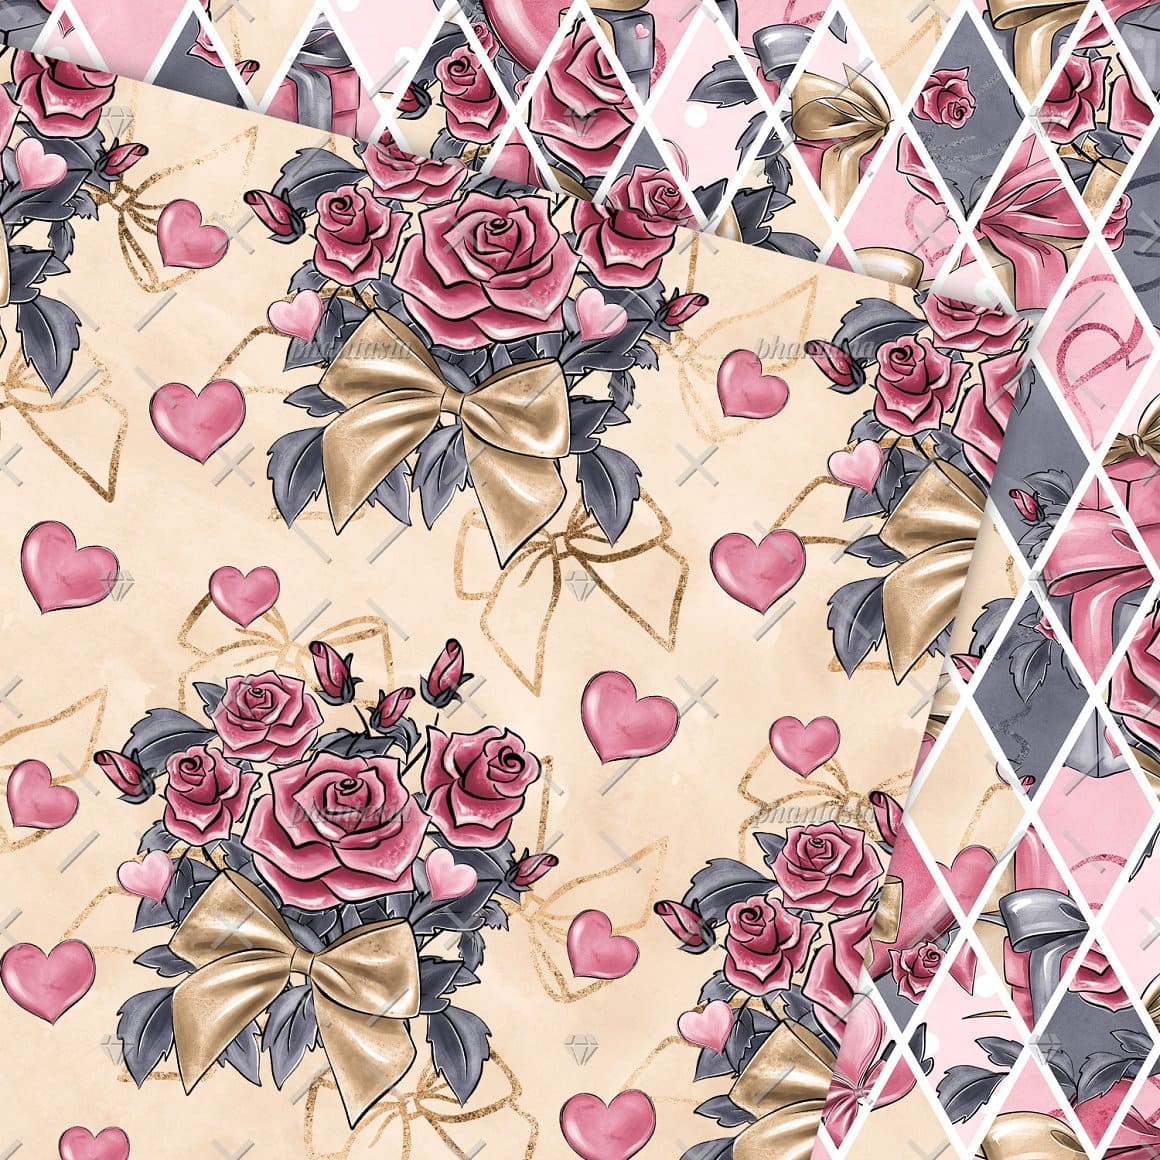 Interesting pattern design for Valentine's Day.